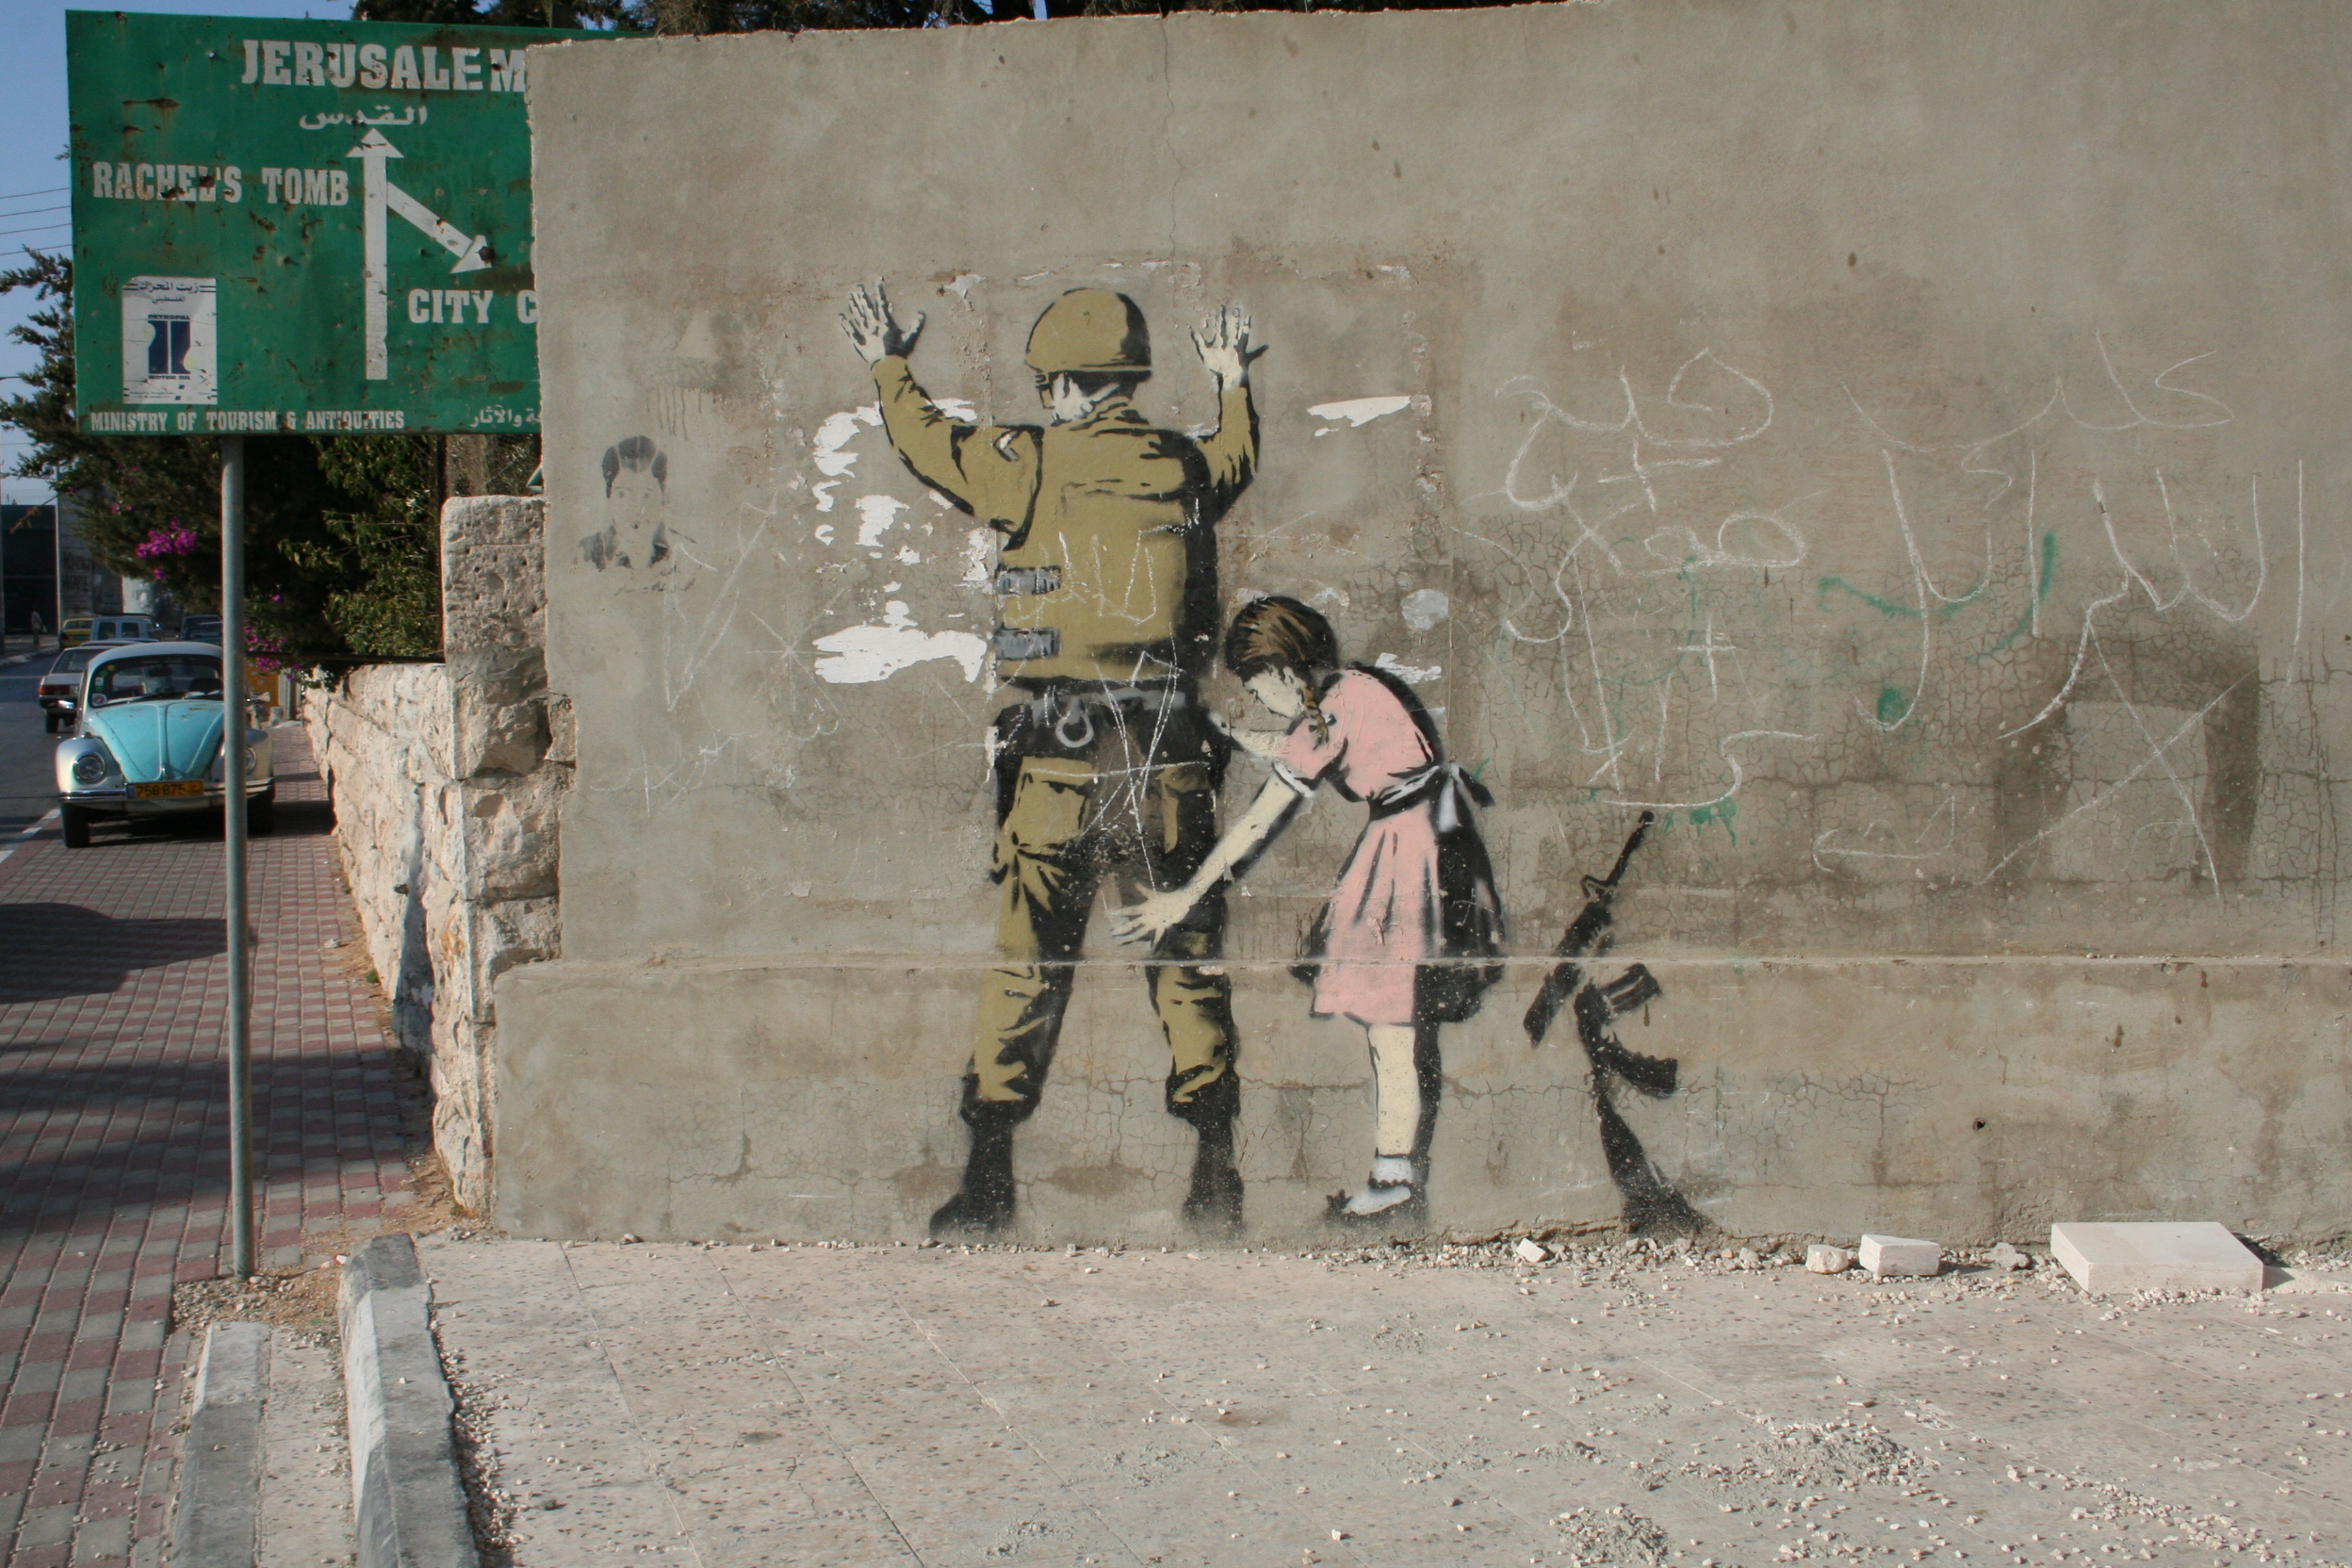 Graffiti by Banksy in the Israeli-occupied Bethlehem ...